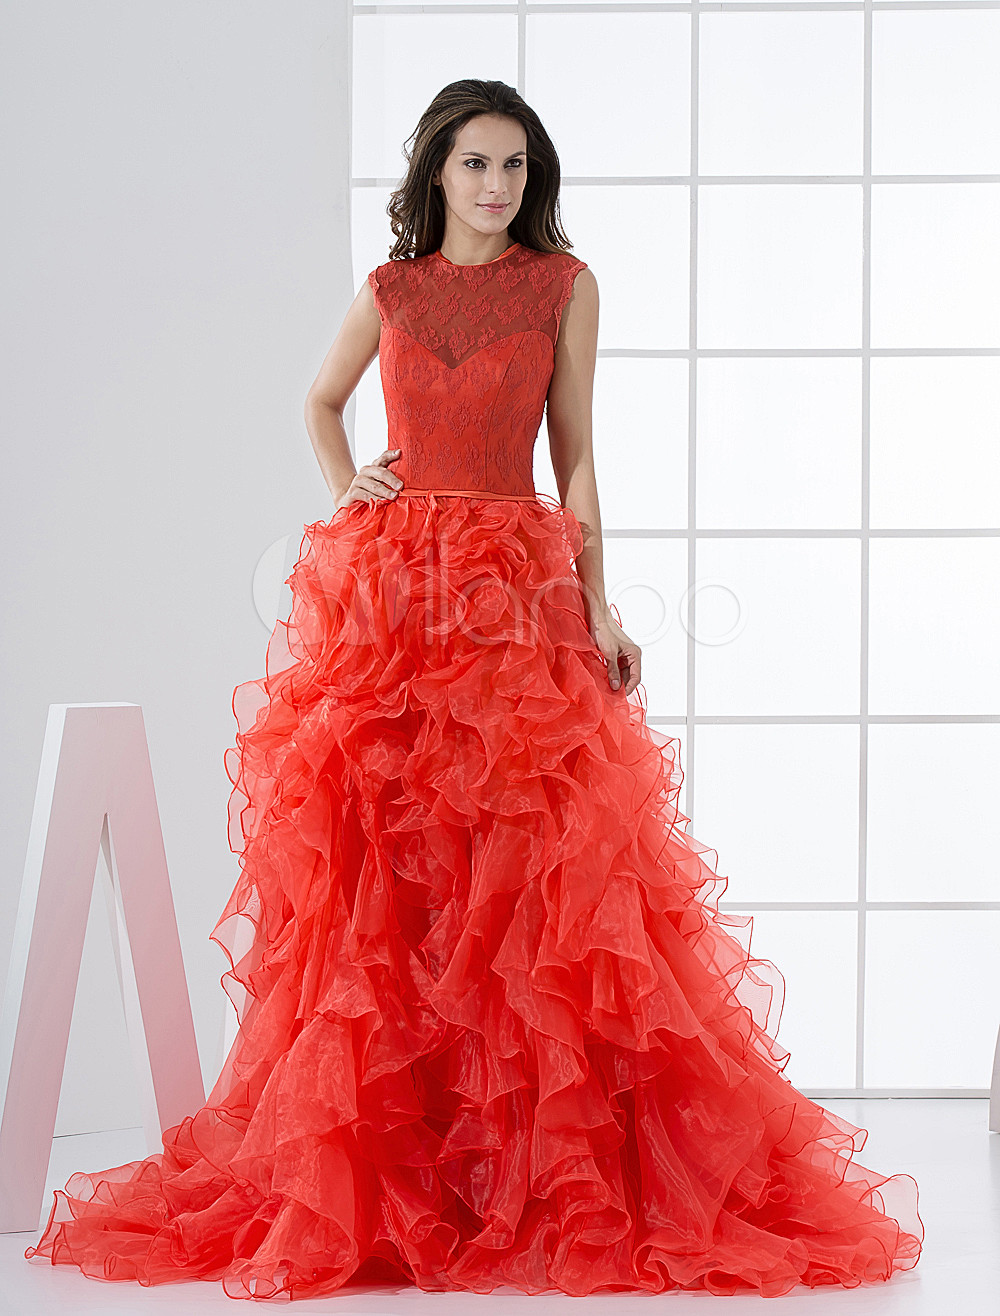 Luxurious Red Jewel Neck Organza Bridal Wedding Dress (Red Wedding Dress) photo